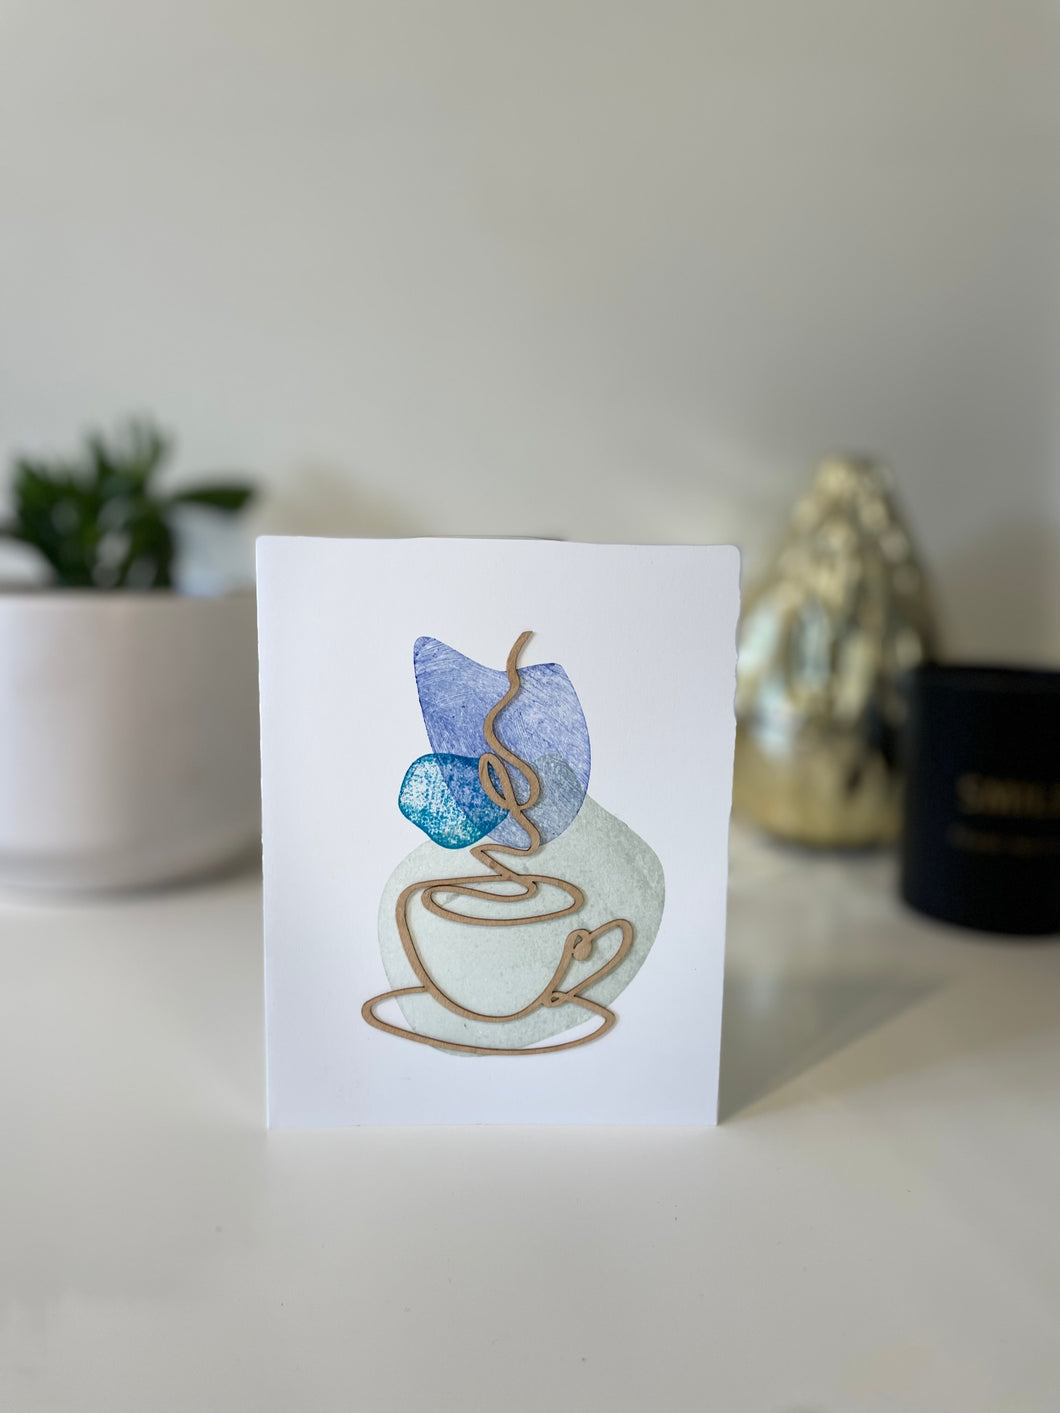 Coffee mug greeting card with wooden design